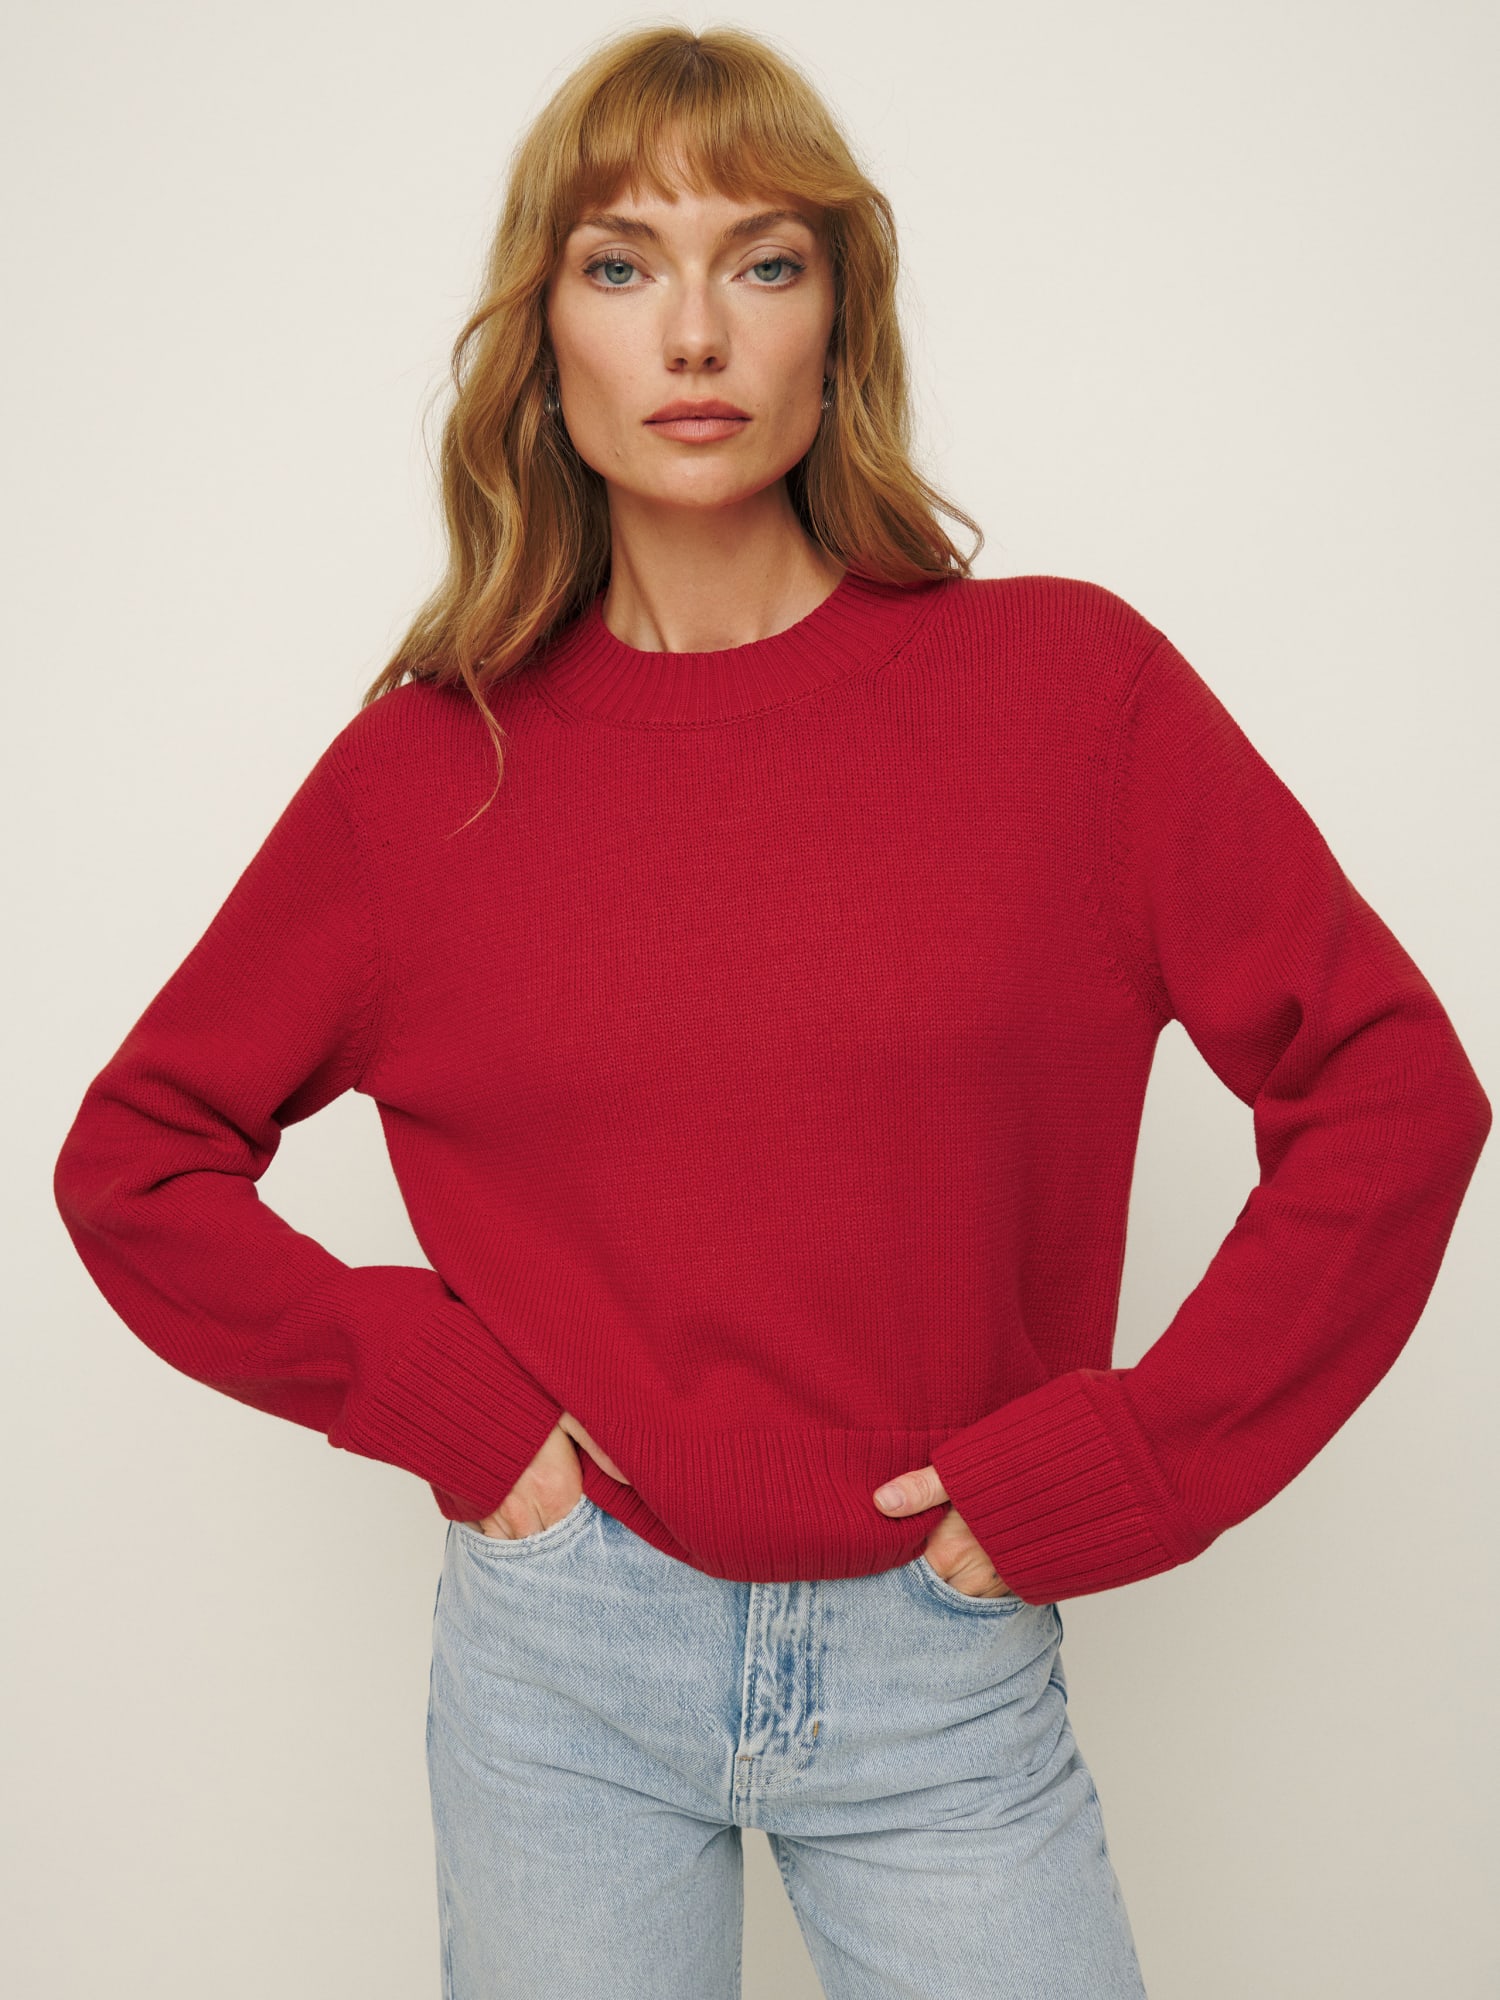 Anna Cotton Crewneck Sweater